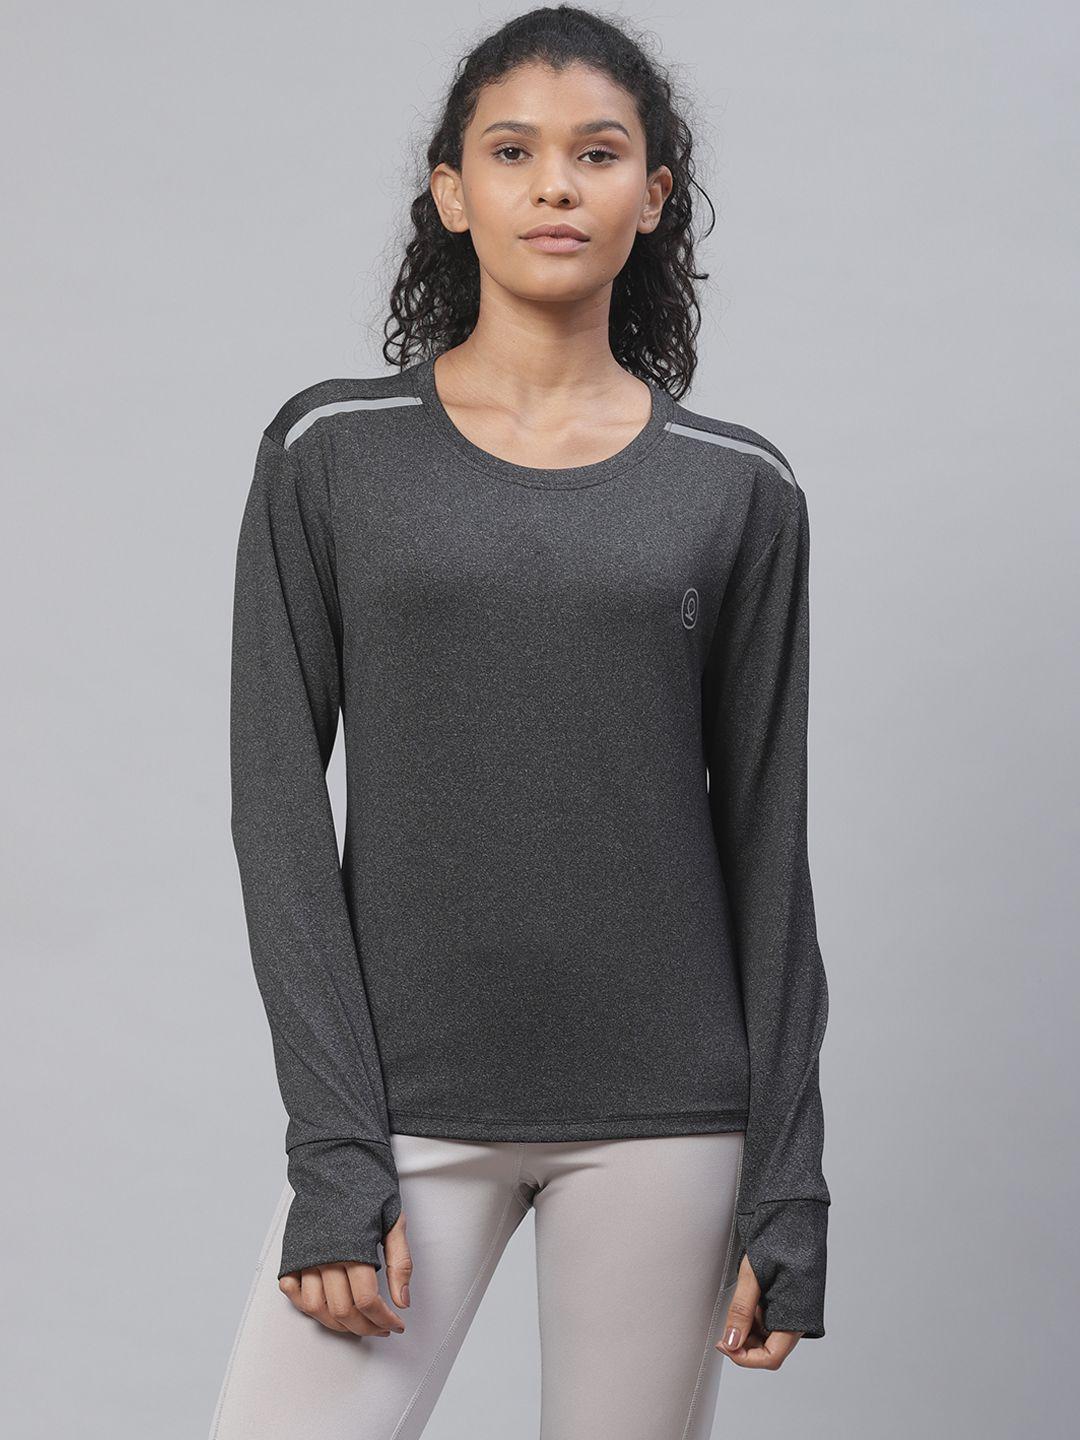 chkokko-women-charcoal-grey-solid-round-neck-yoga-t-shirt